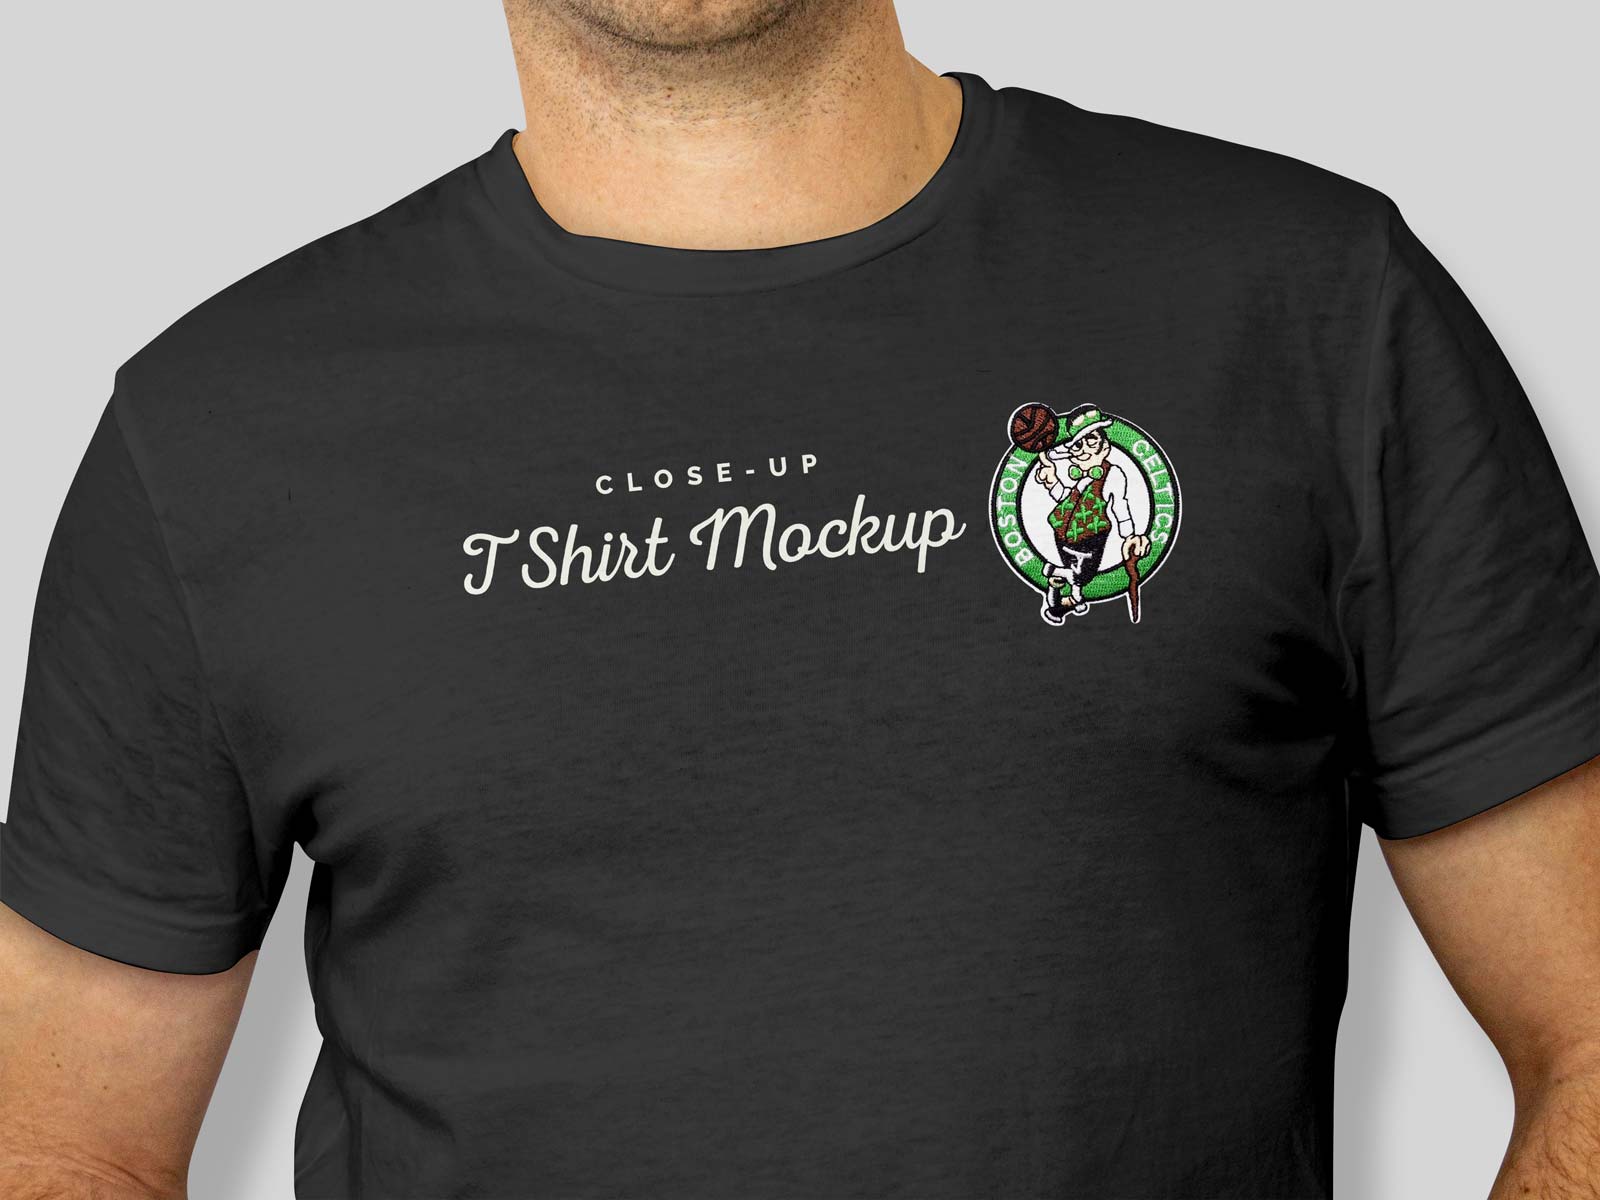 Download Free Closeup T-Shirt Mockup PSD | Designbolts